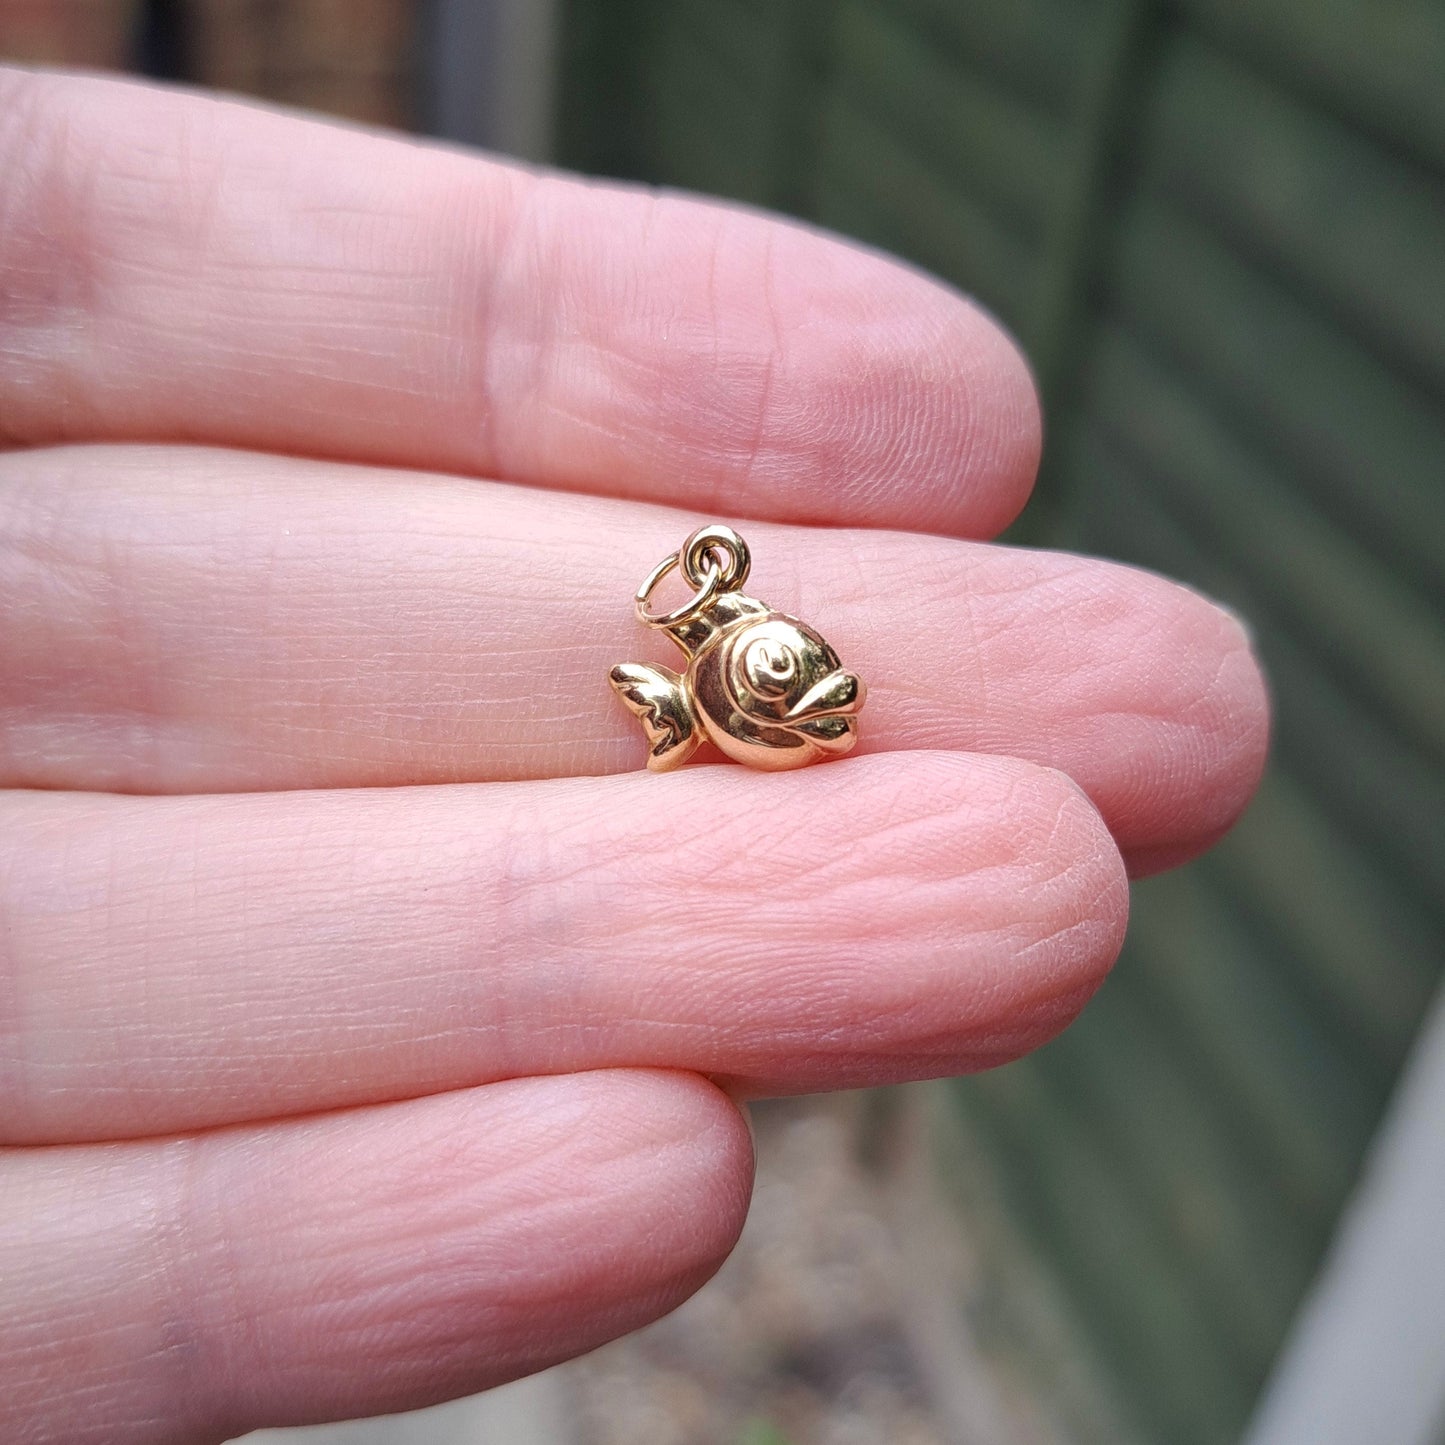 Mini 9ct Gold Puffy Fish Charm / Pendant